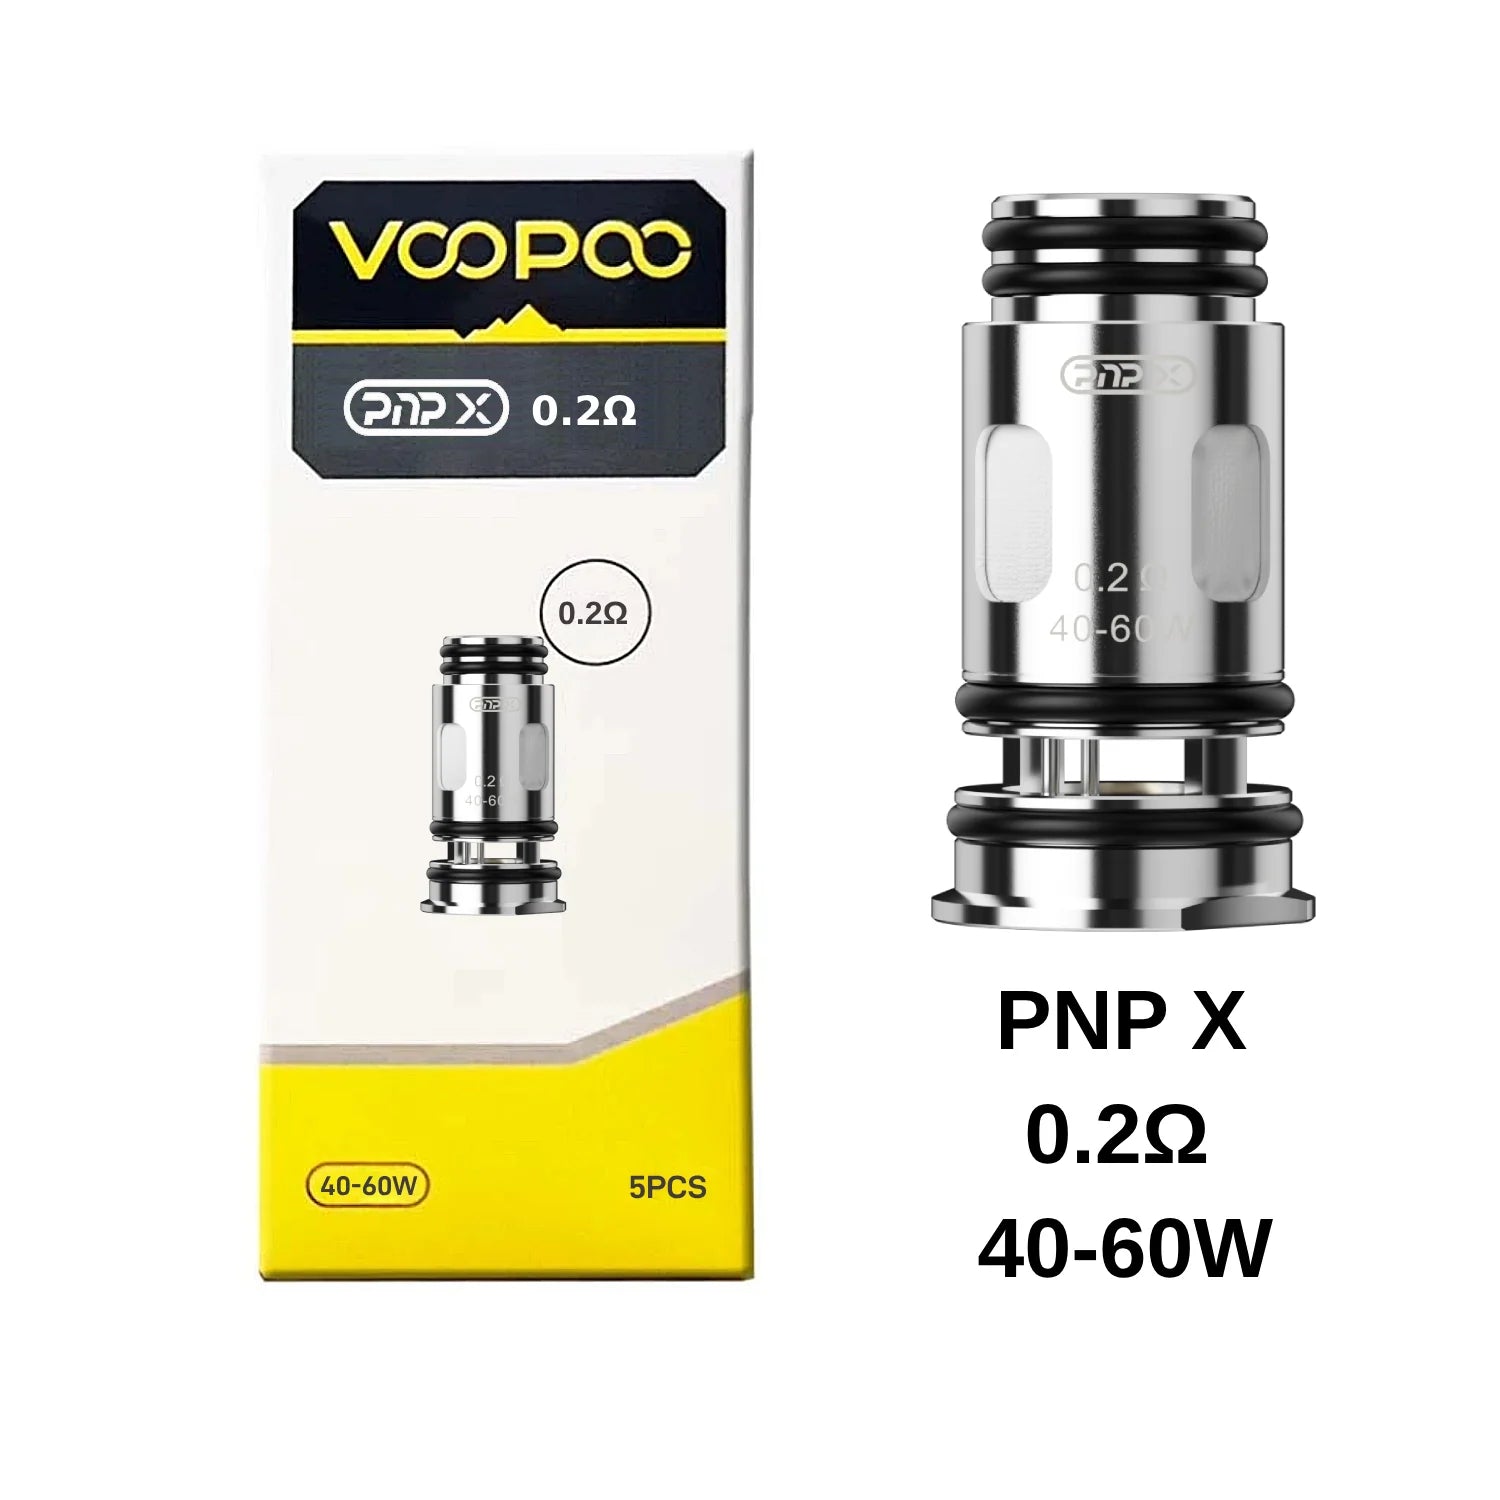 VOOPOO PNP X 0.2 COILS (5PCS)